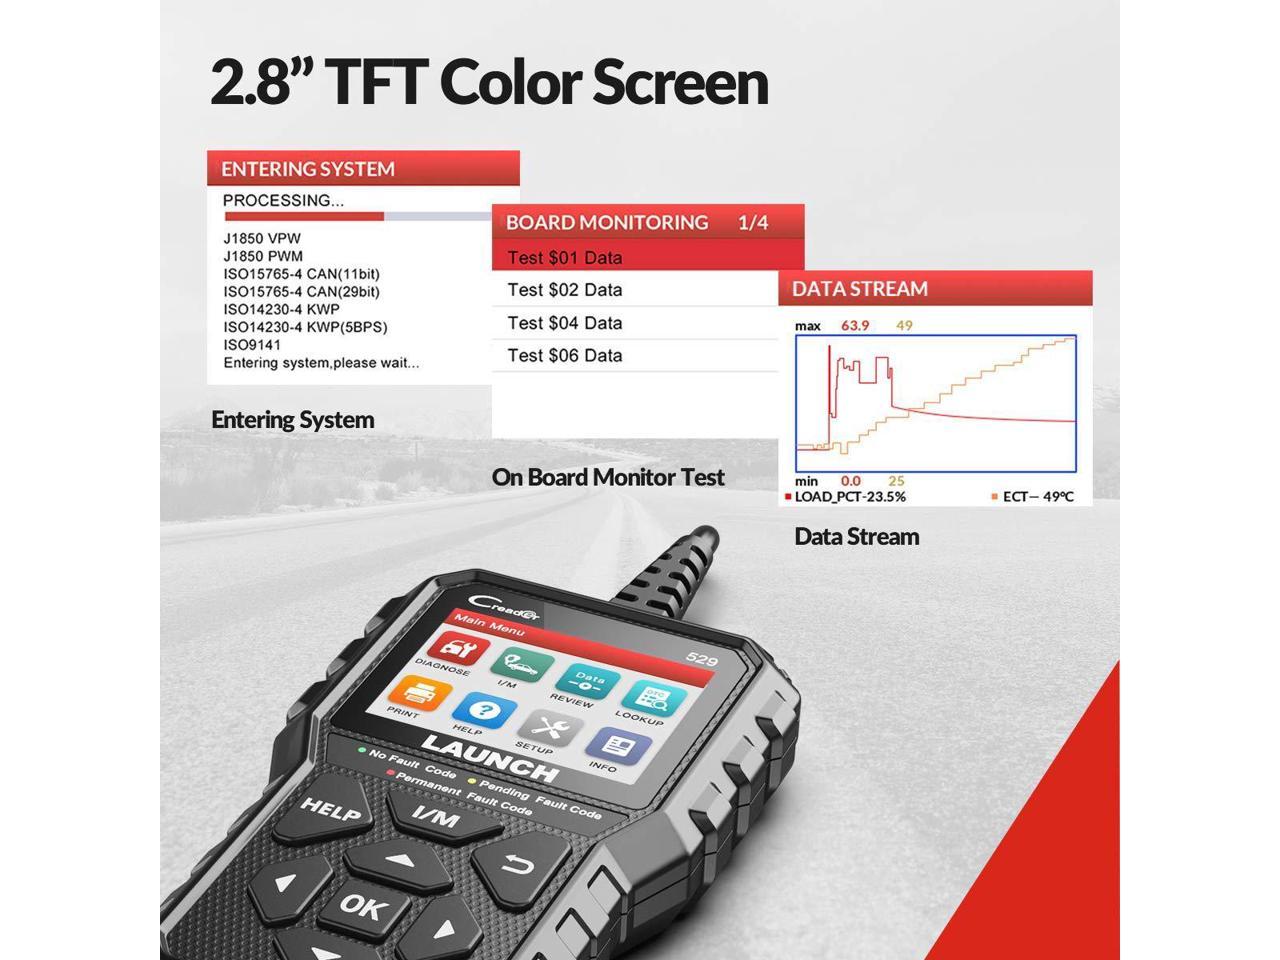 Launch CR319 CR529 Automotive OBDII Diagnostic Scan Tool Car Fault Code Reader